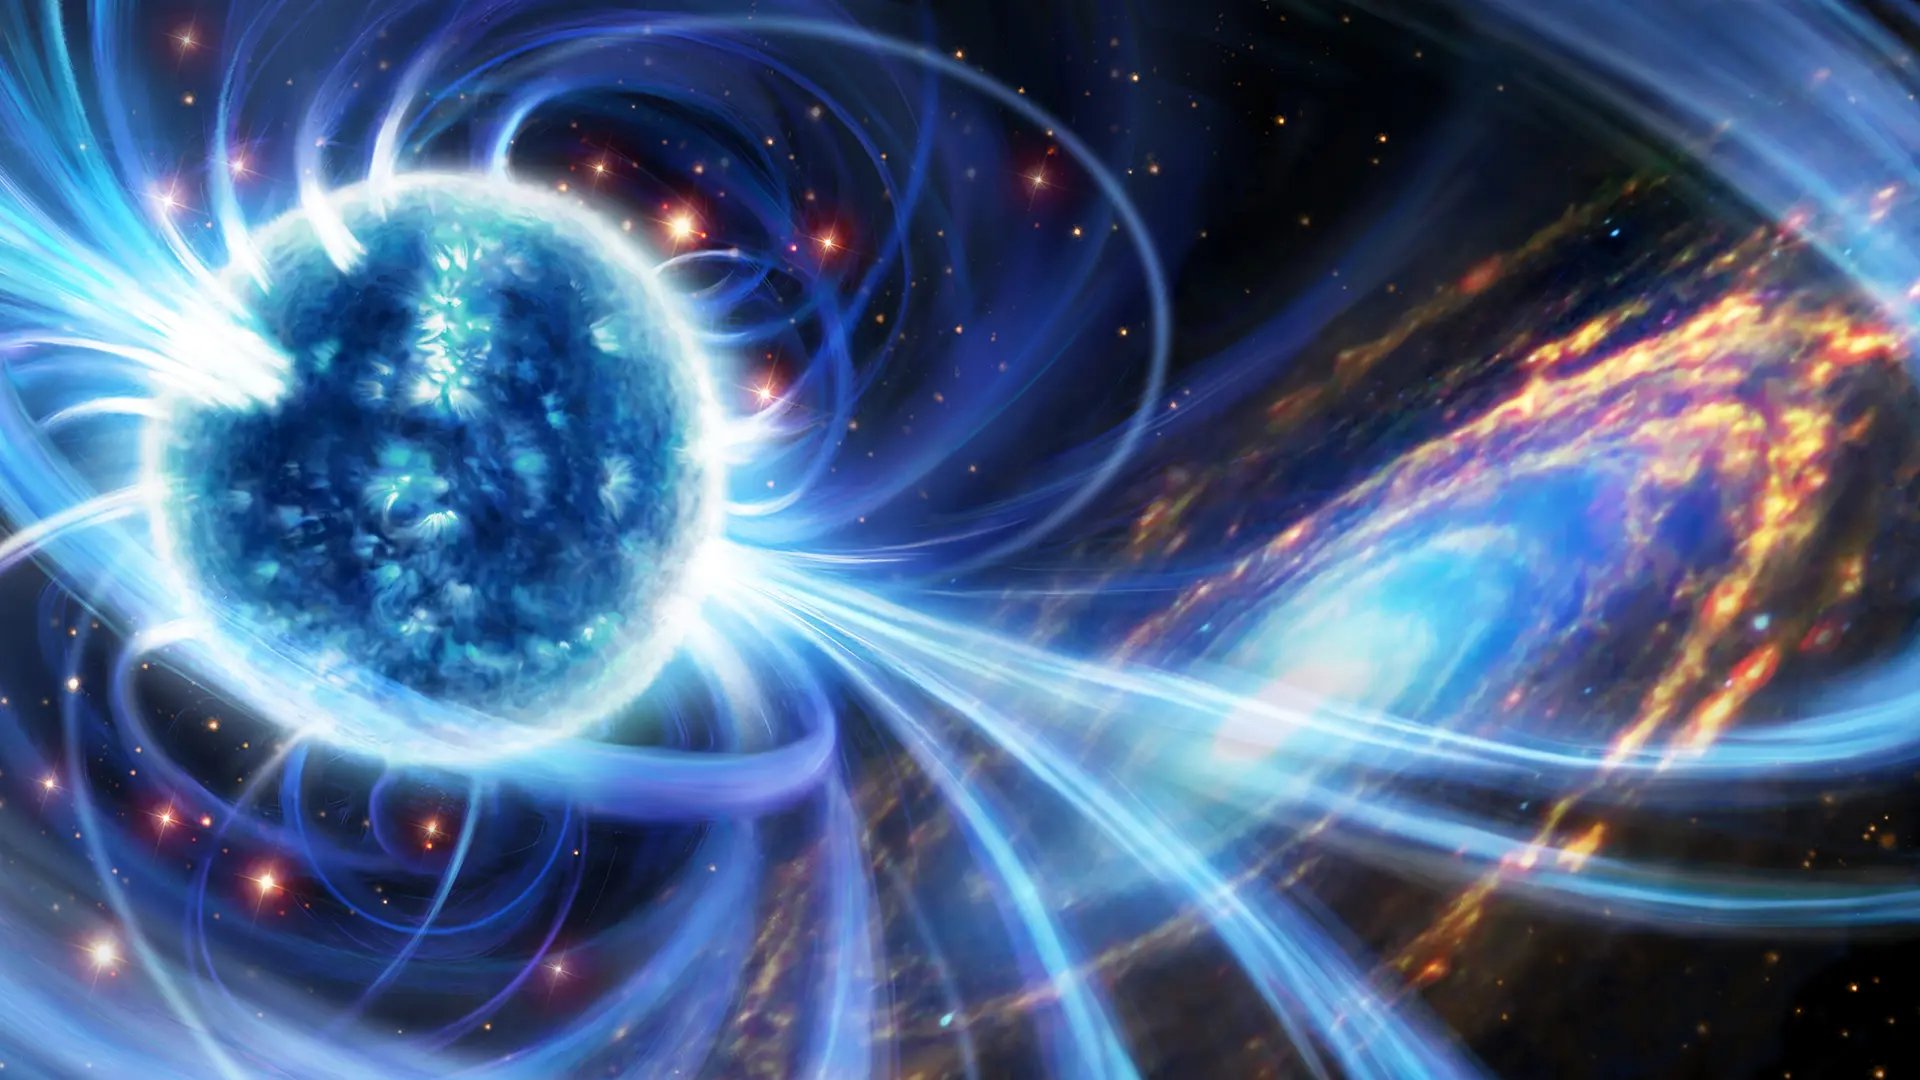 Magnetar illustration with fast radio burst